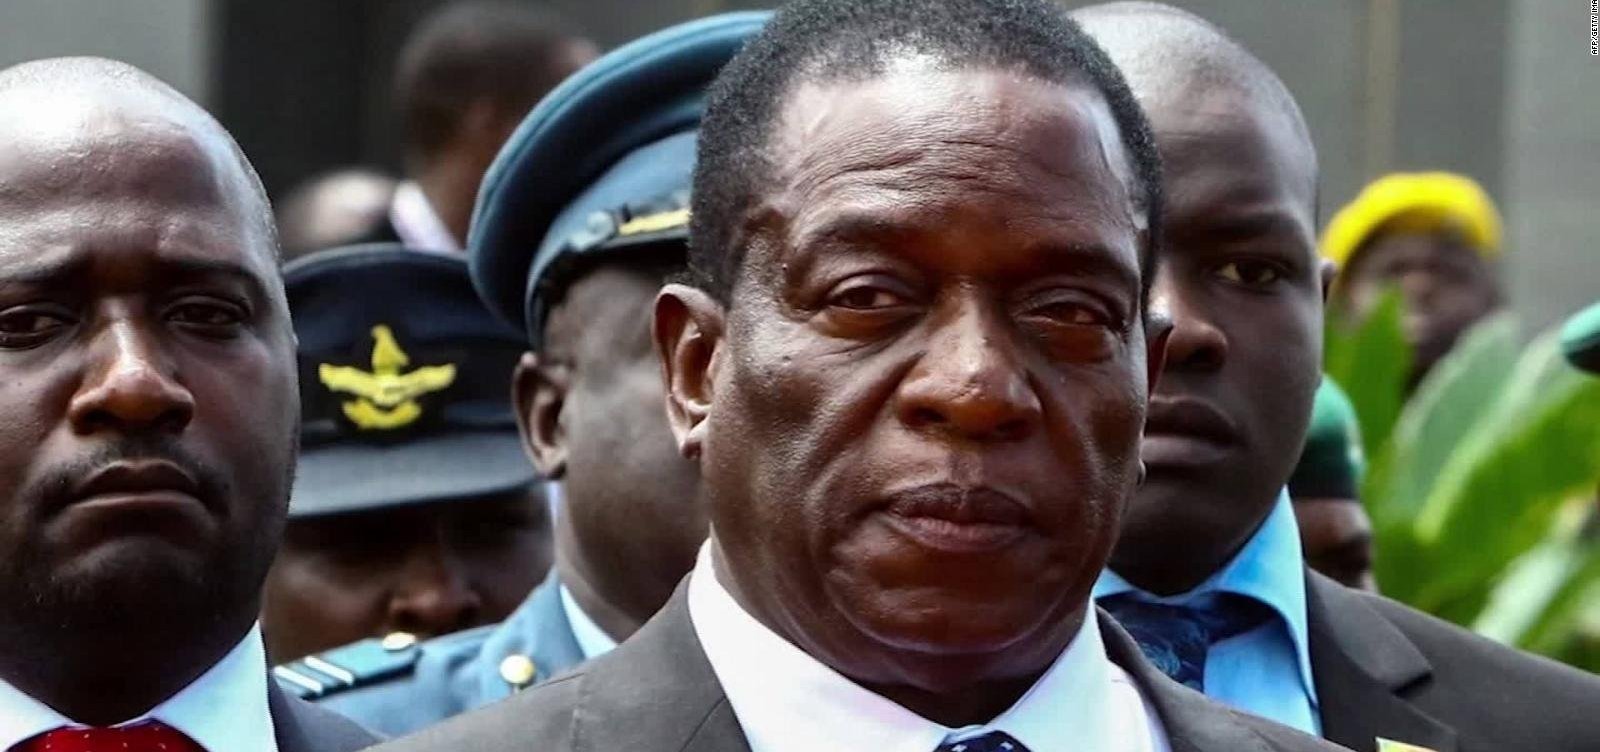 Comício do presidente do Zimbábue é alvo de bomba